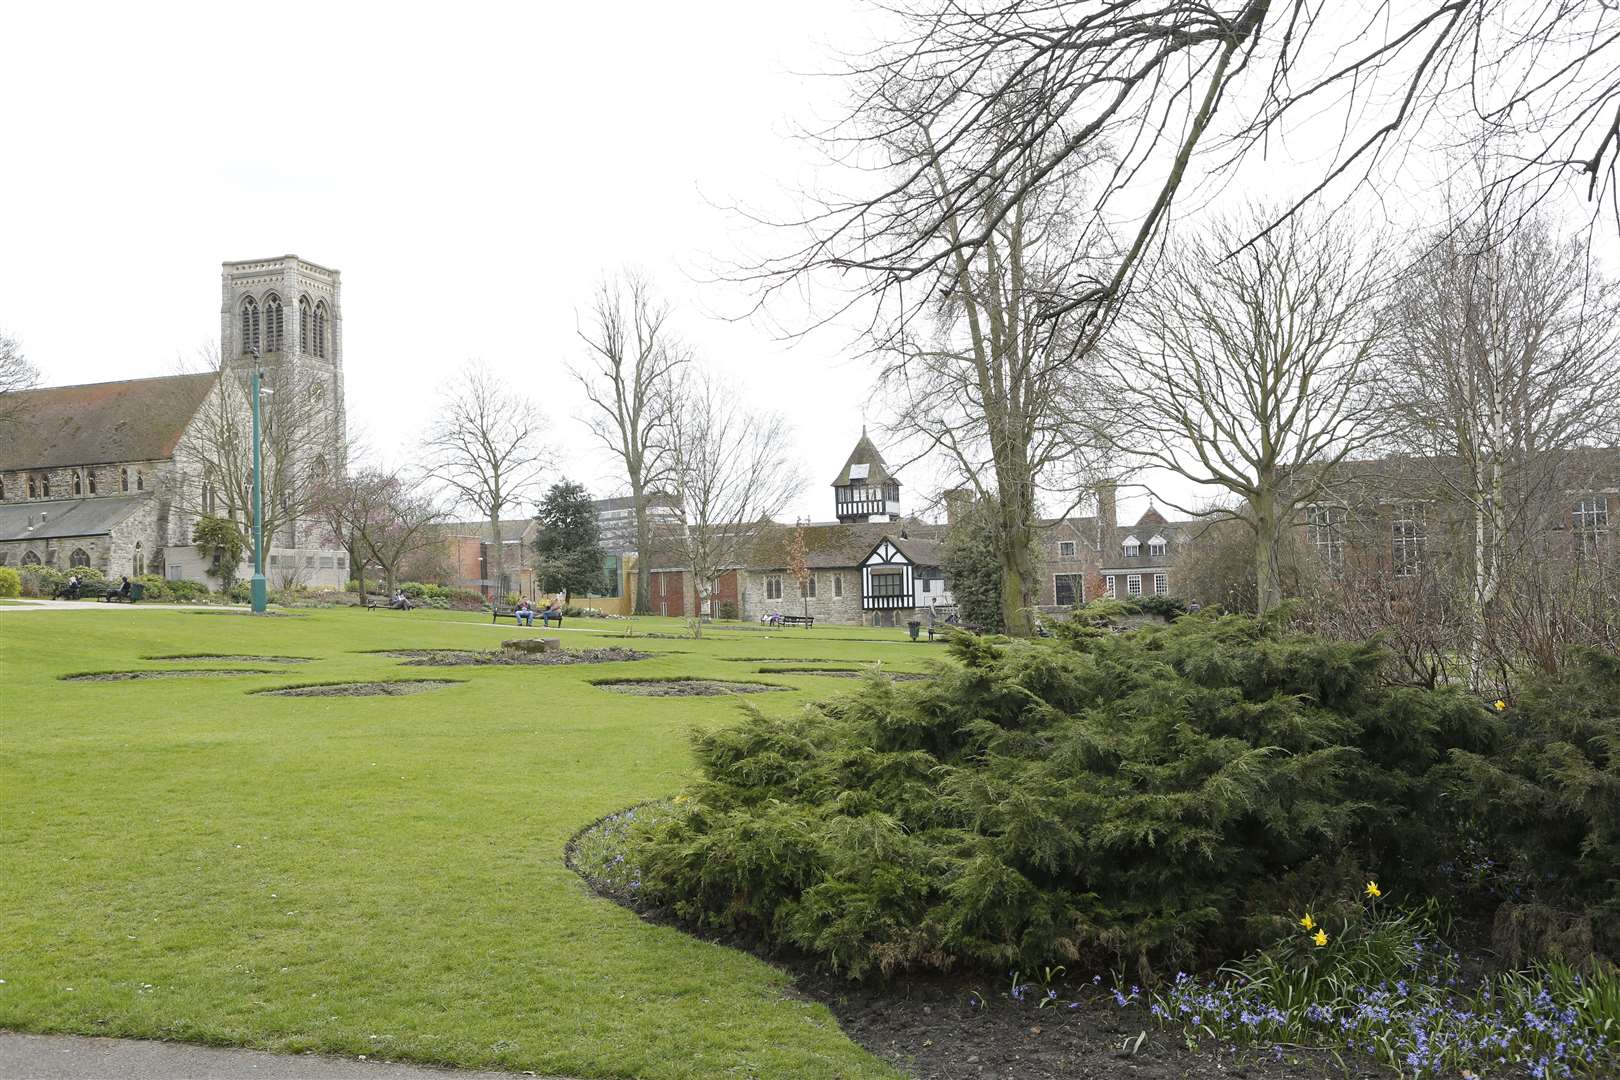 Brenchley Gardens in Maidstone, scene of the attack